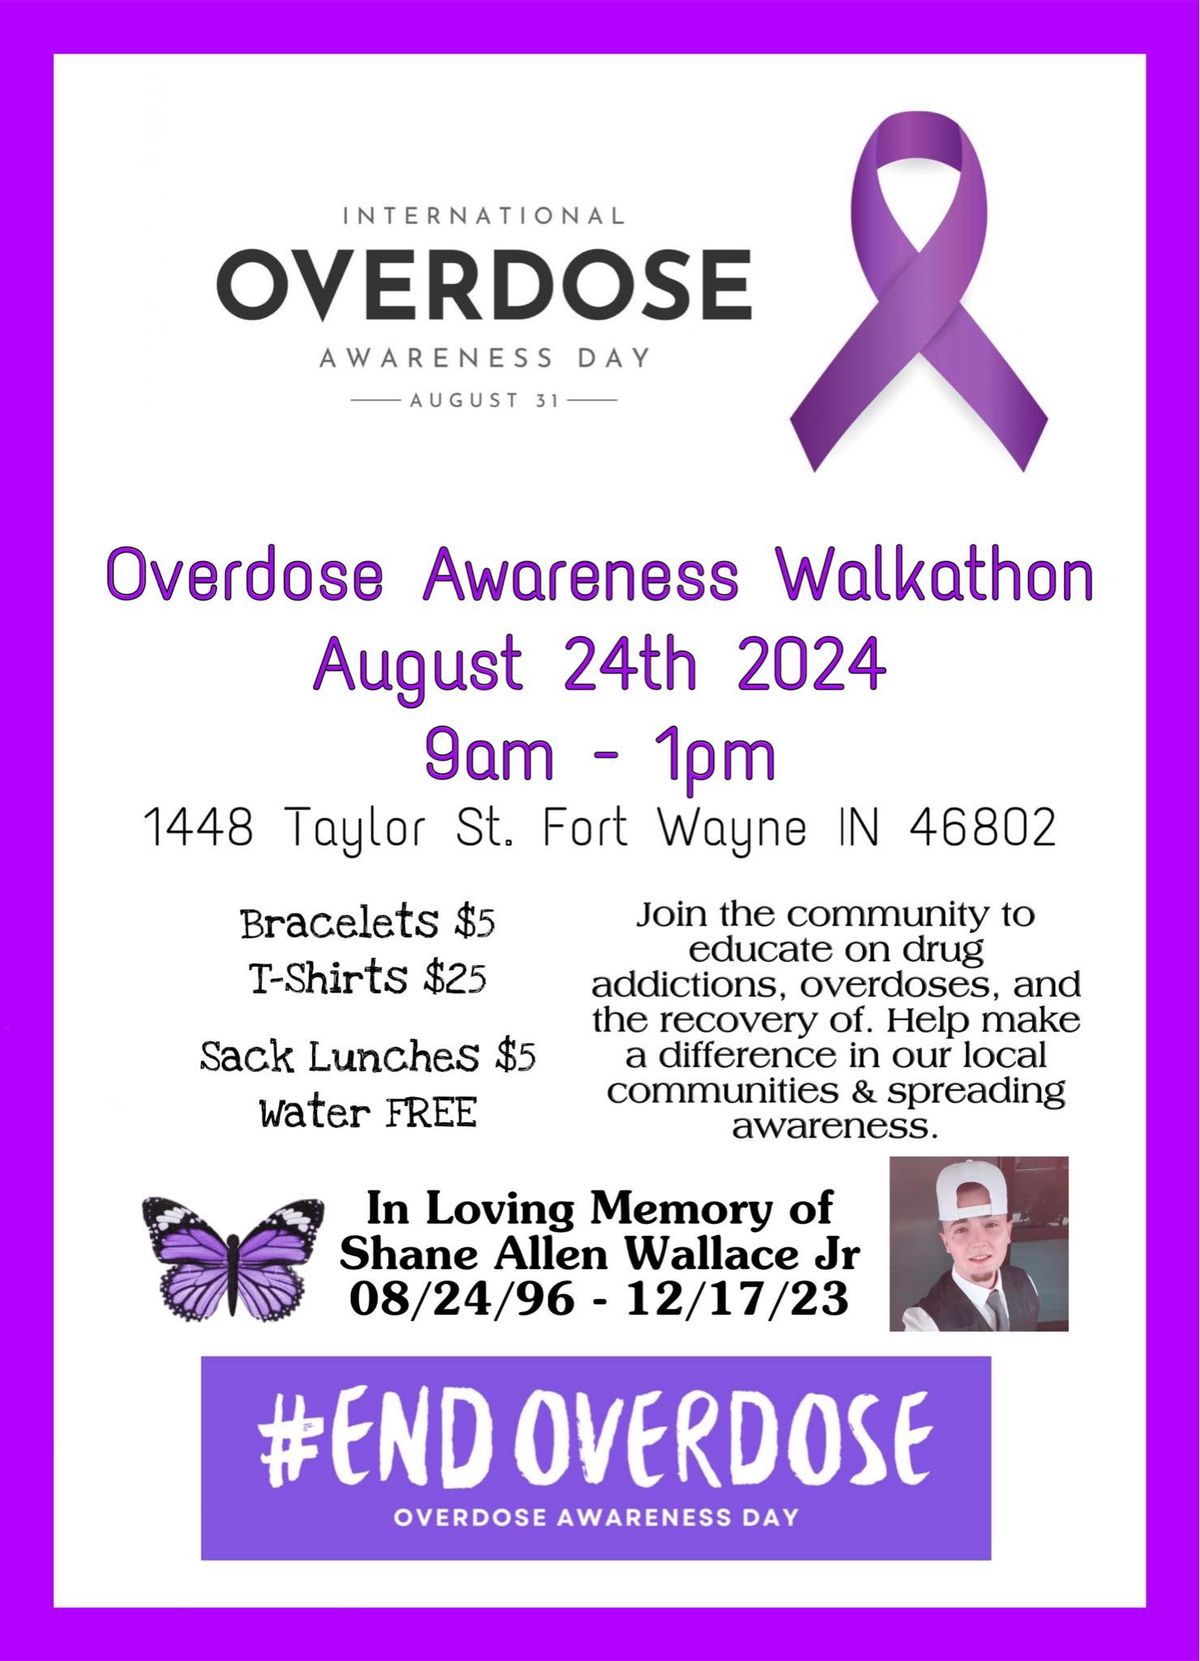 Fight against drug overdose walkathon in memory of Shane Allen Wallace Jr.